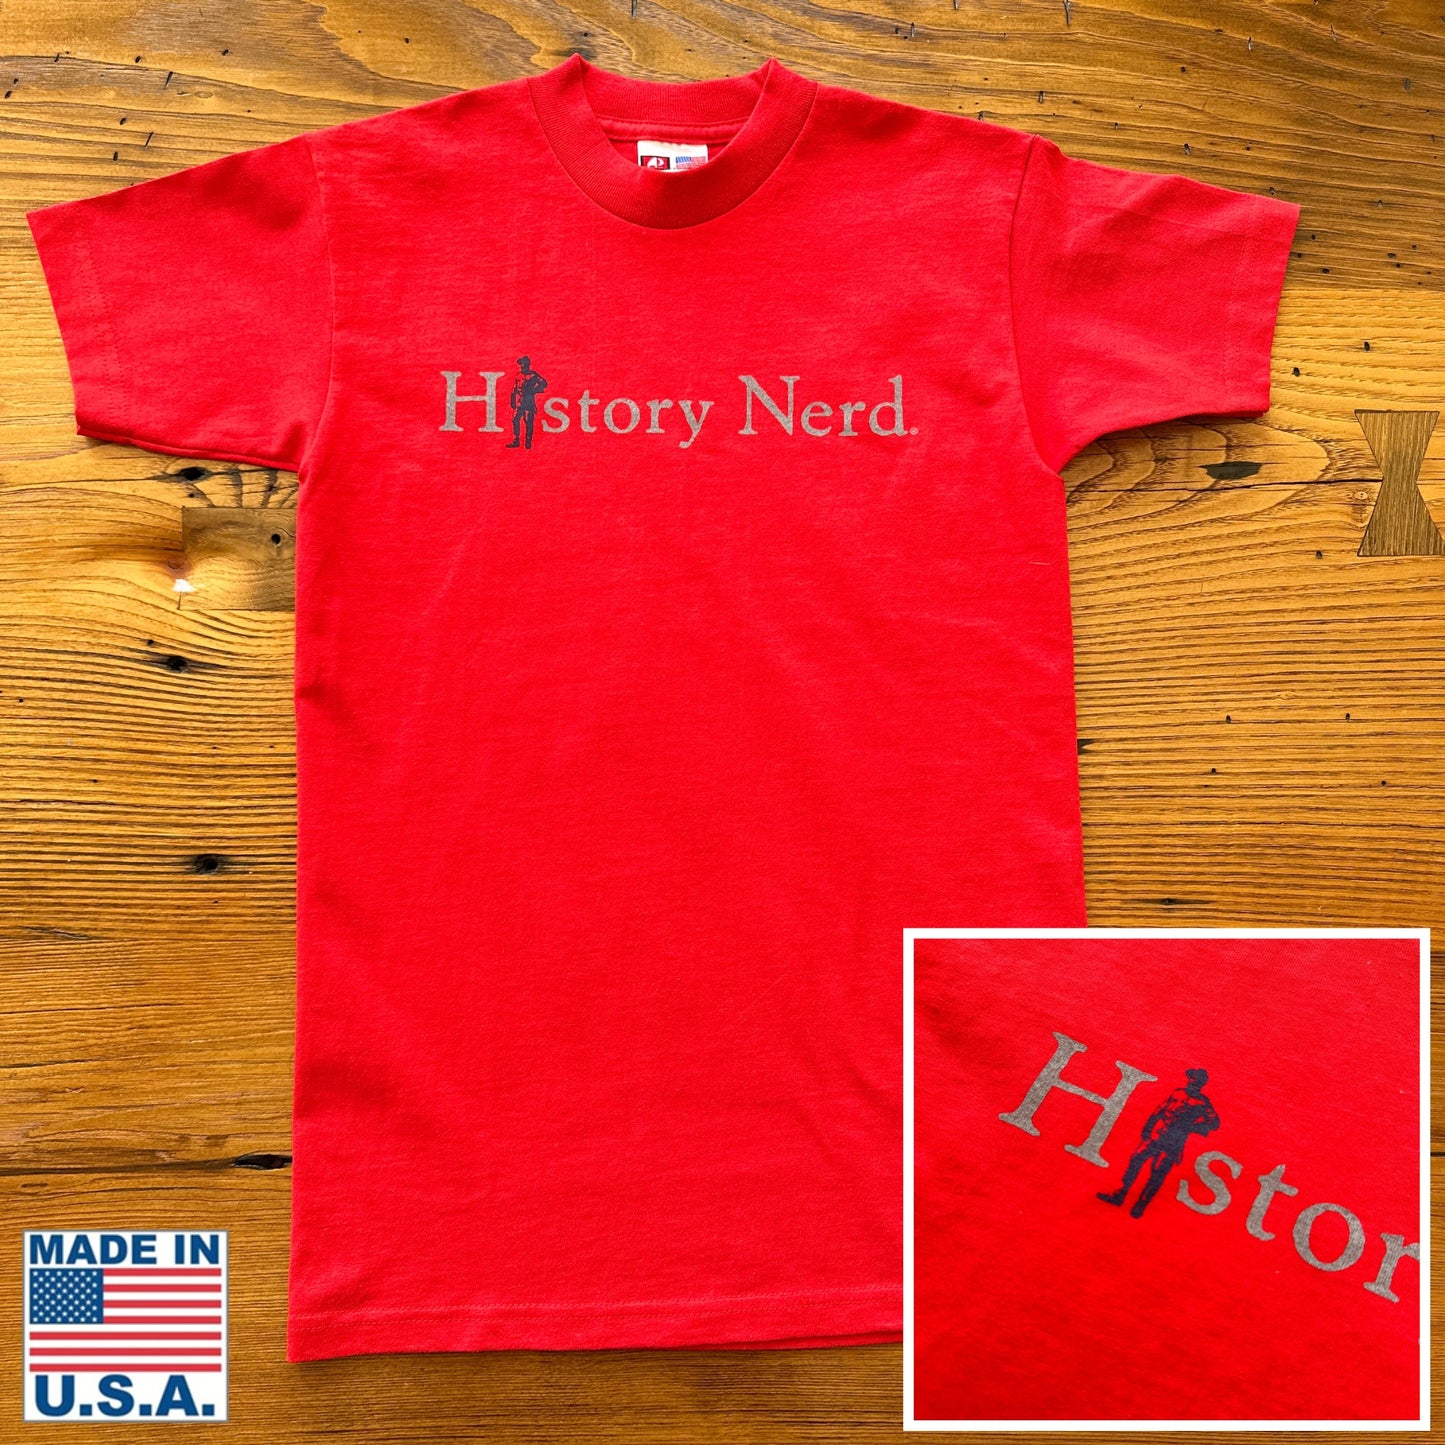 HISTORY NERD® with Teddy Roosevelt short-sleeved shirt